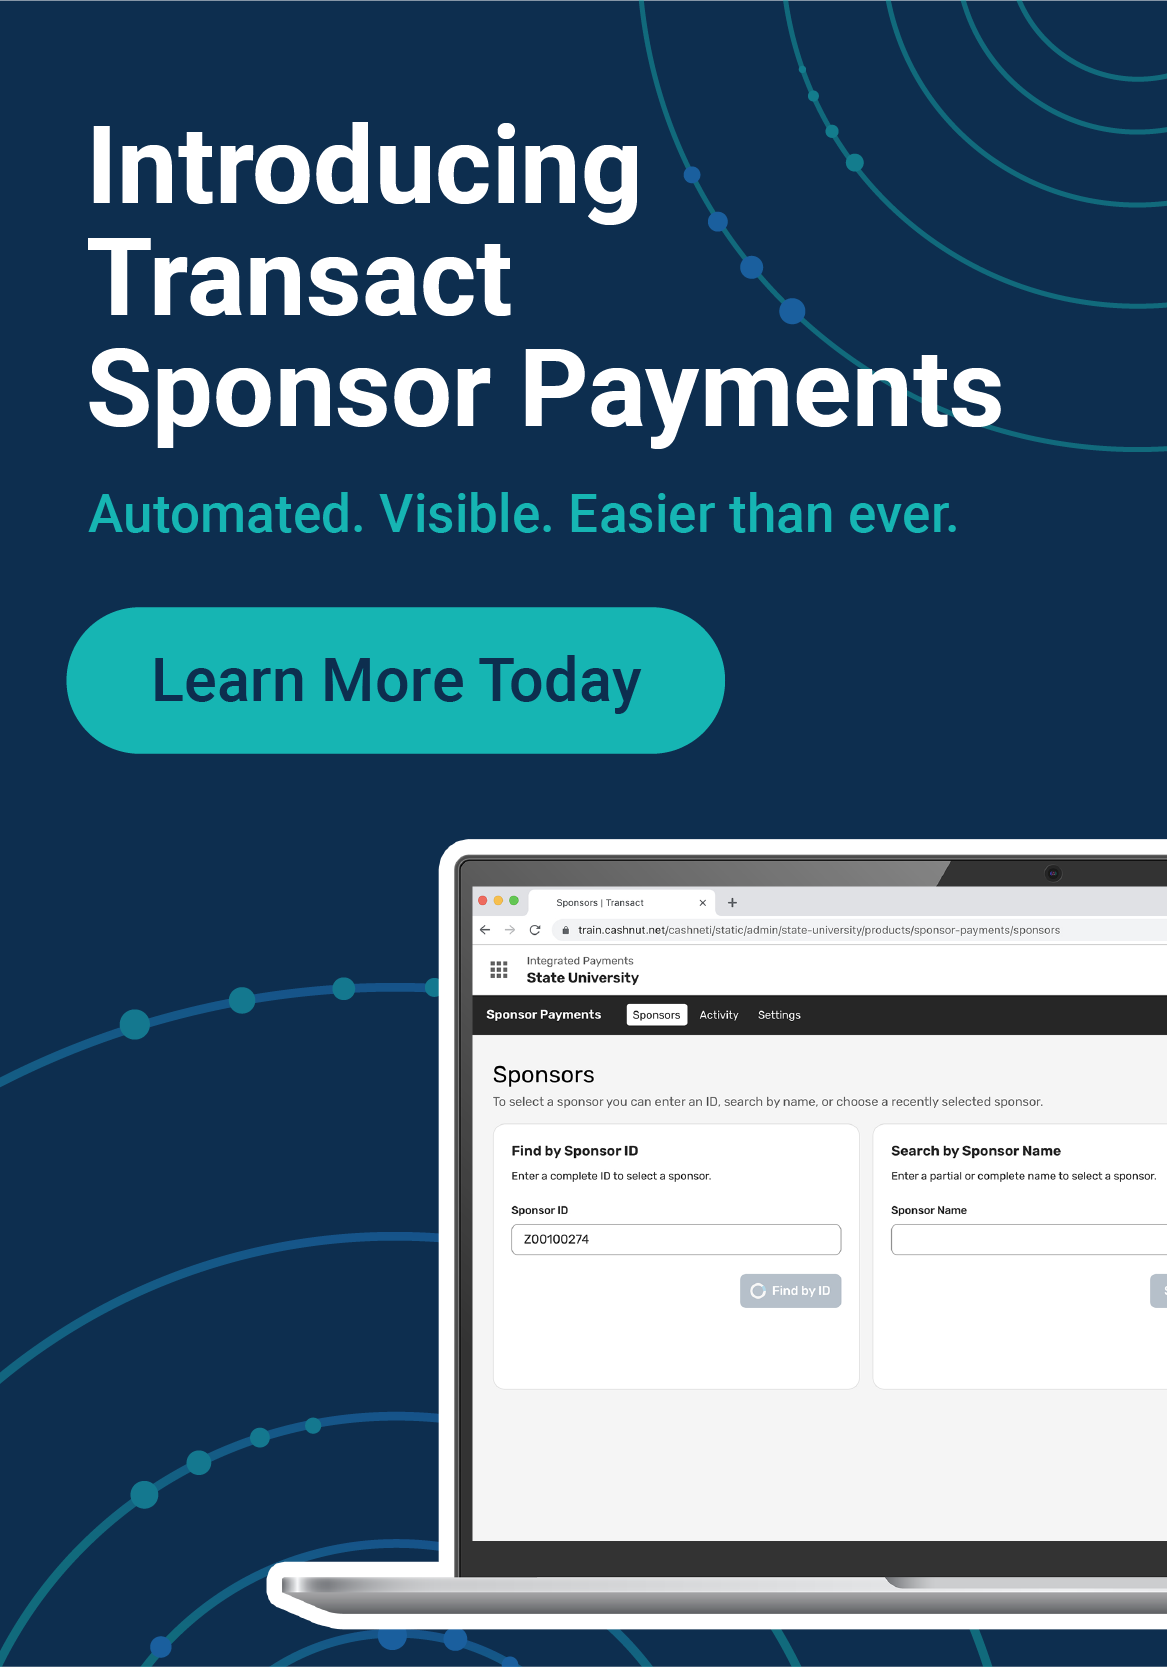 Transact Sponsor Payments